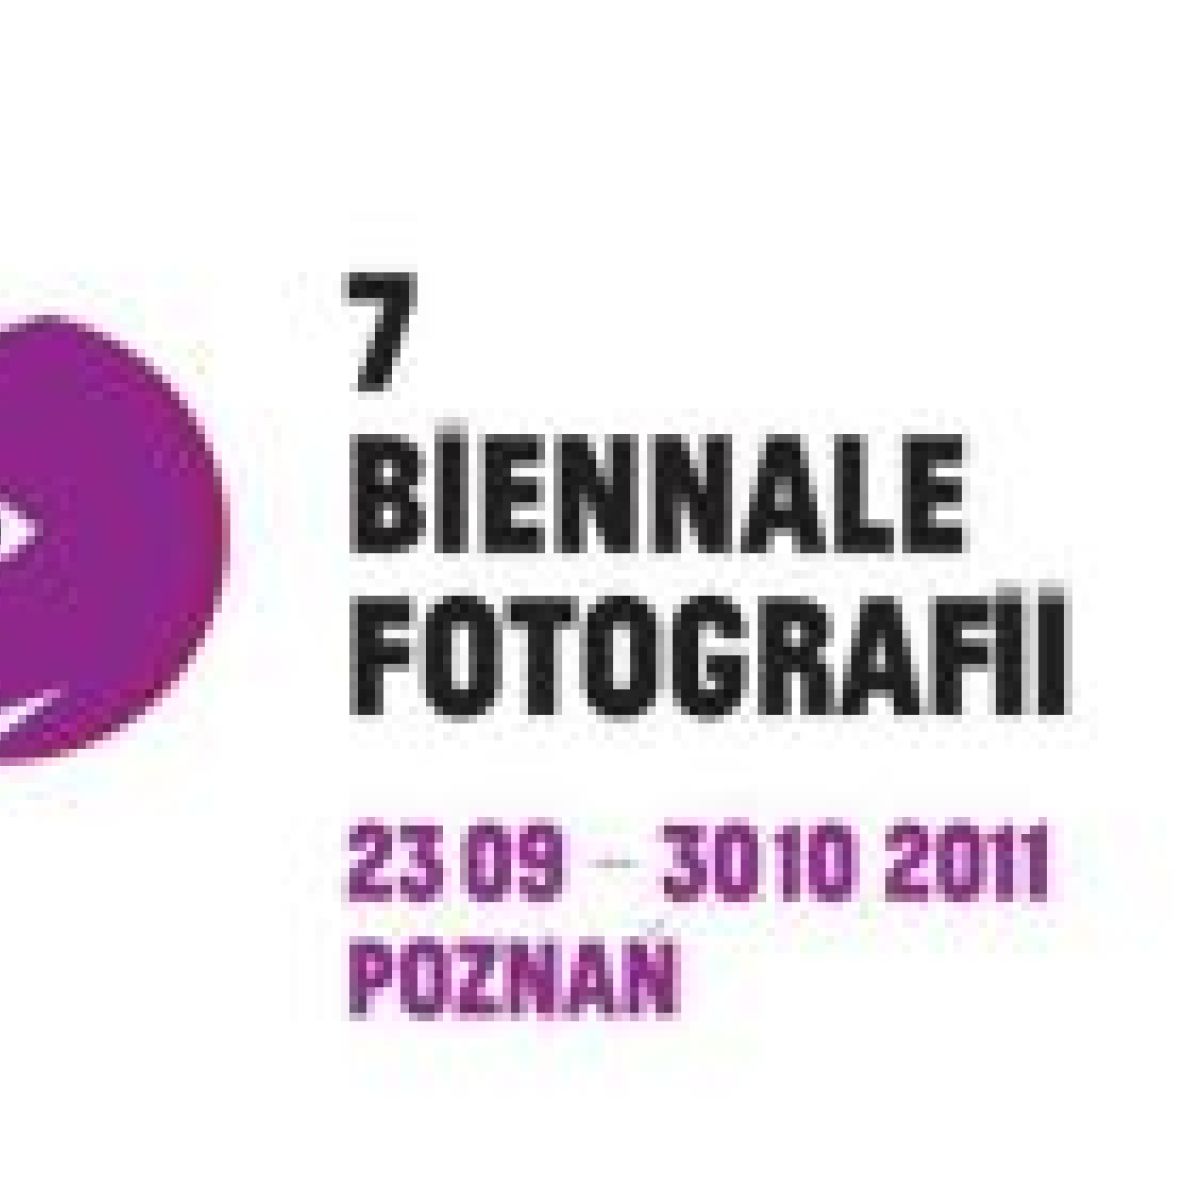 7. Biennale Fotografii - Marginesy?